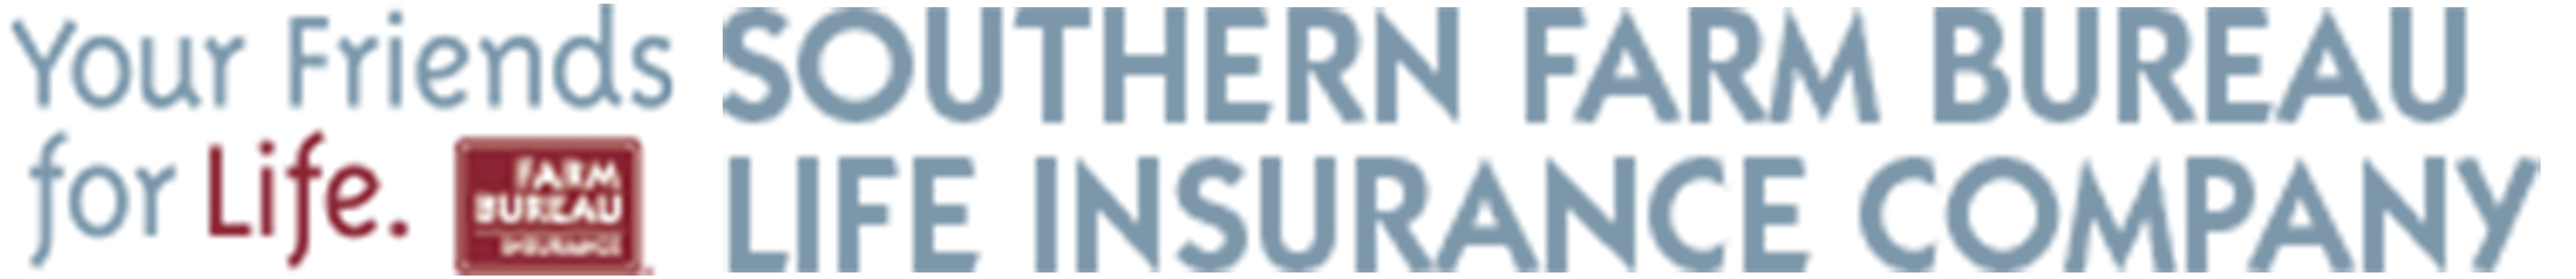 Friends For Life Logo: Southern Farm Bureau Life Insurance